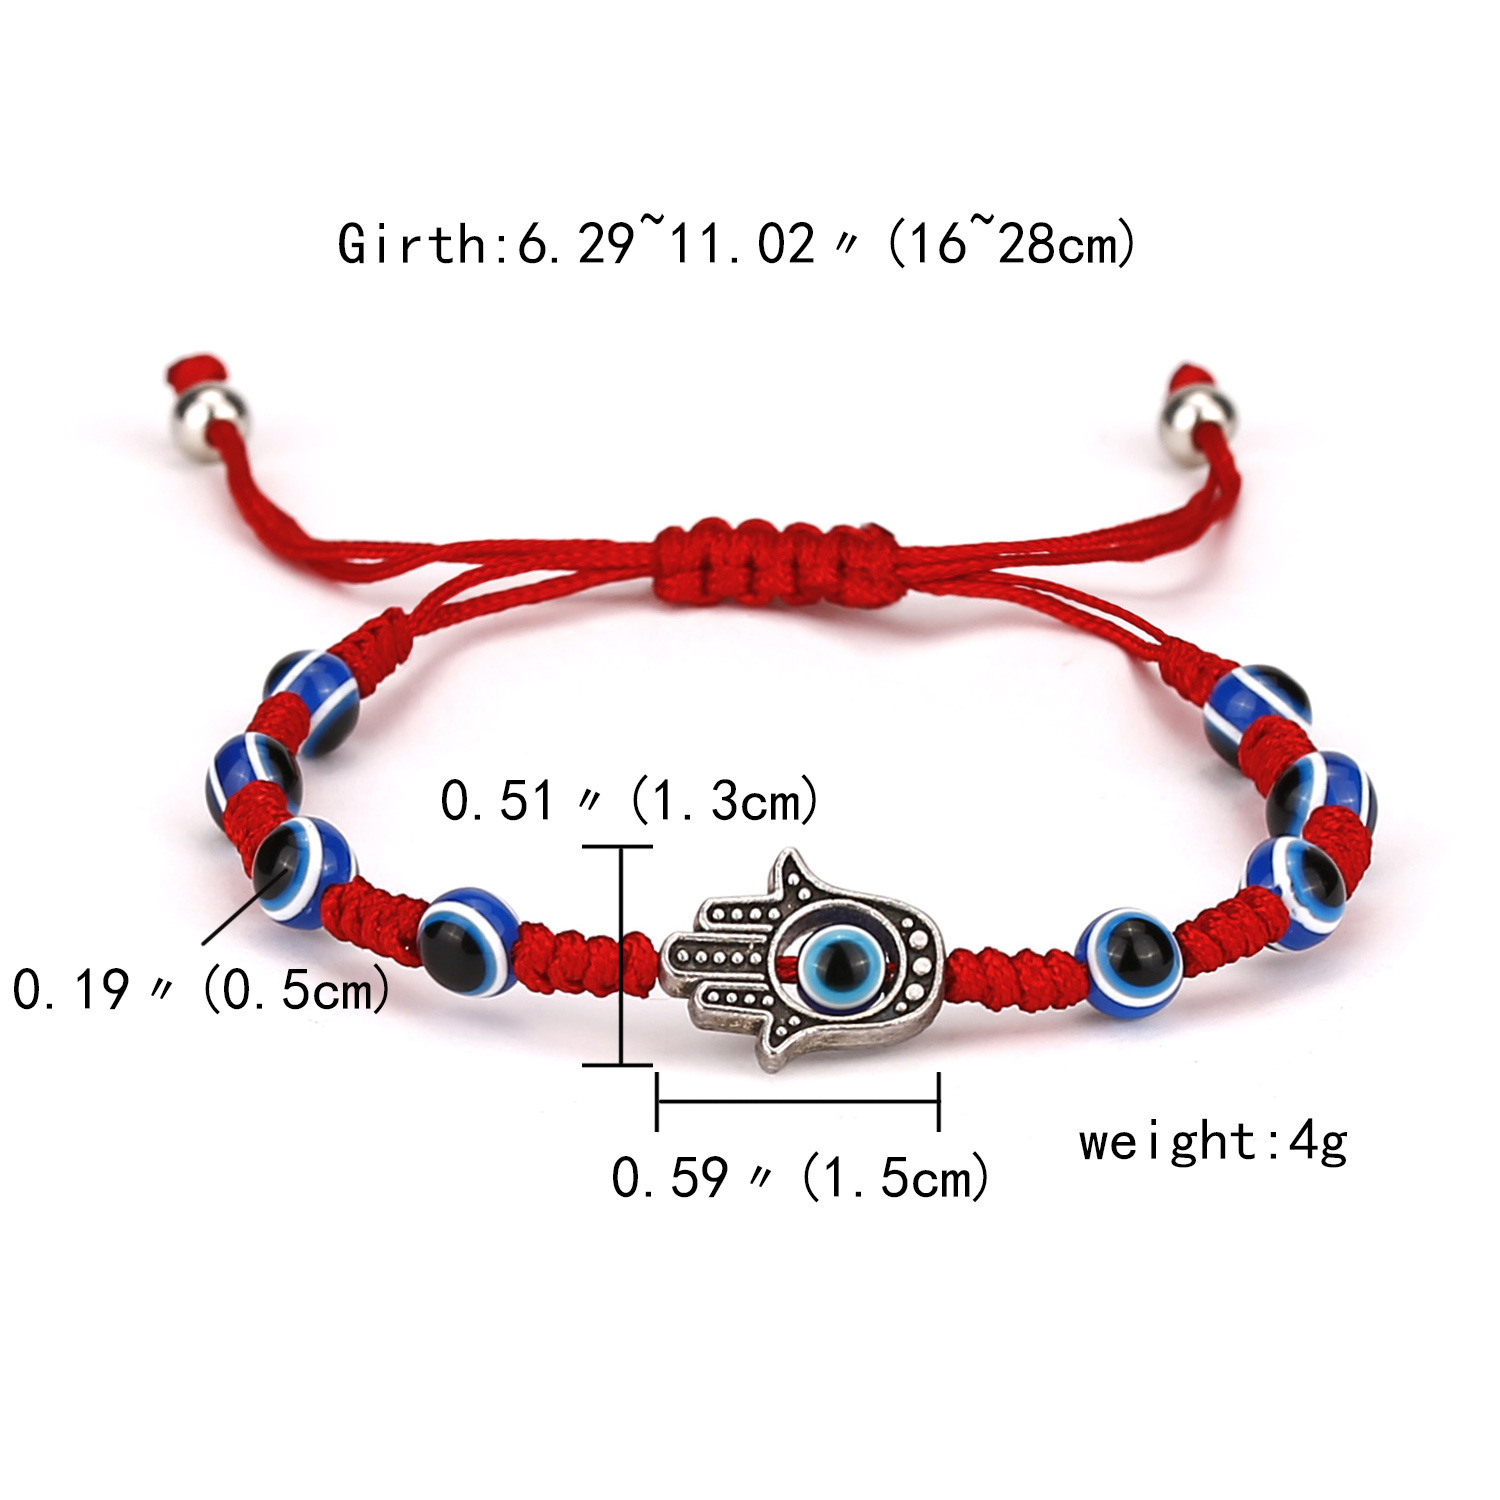 Mode verstellbares Armband kreatives neues blaues Auge Armband bses Auge rotes Seil geflochtenes Armbandpicture3